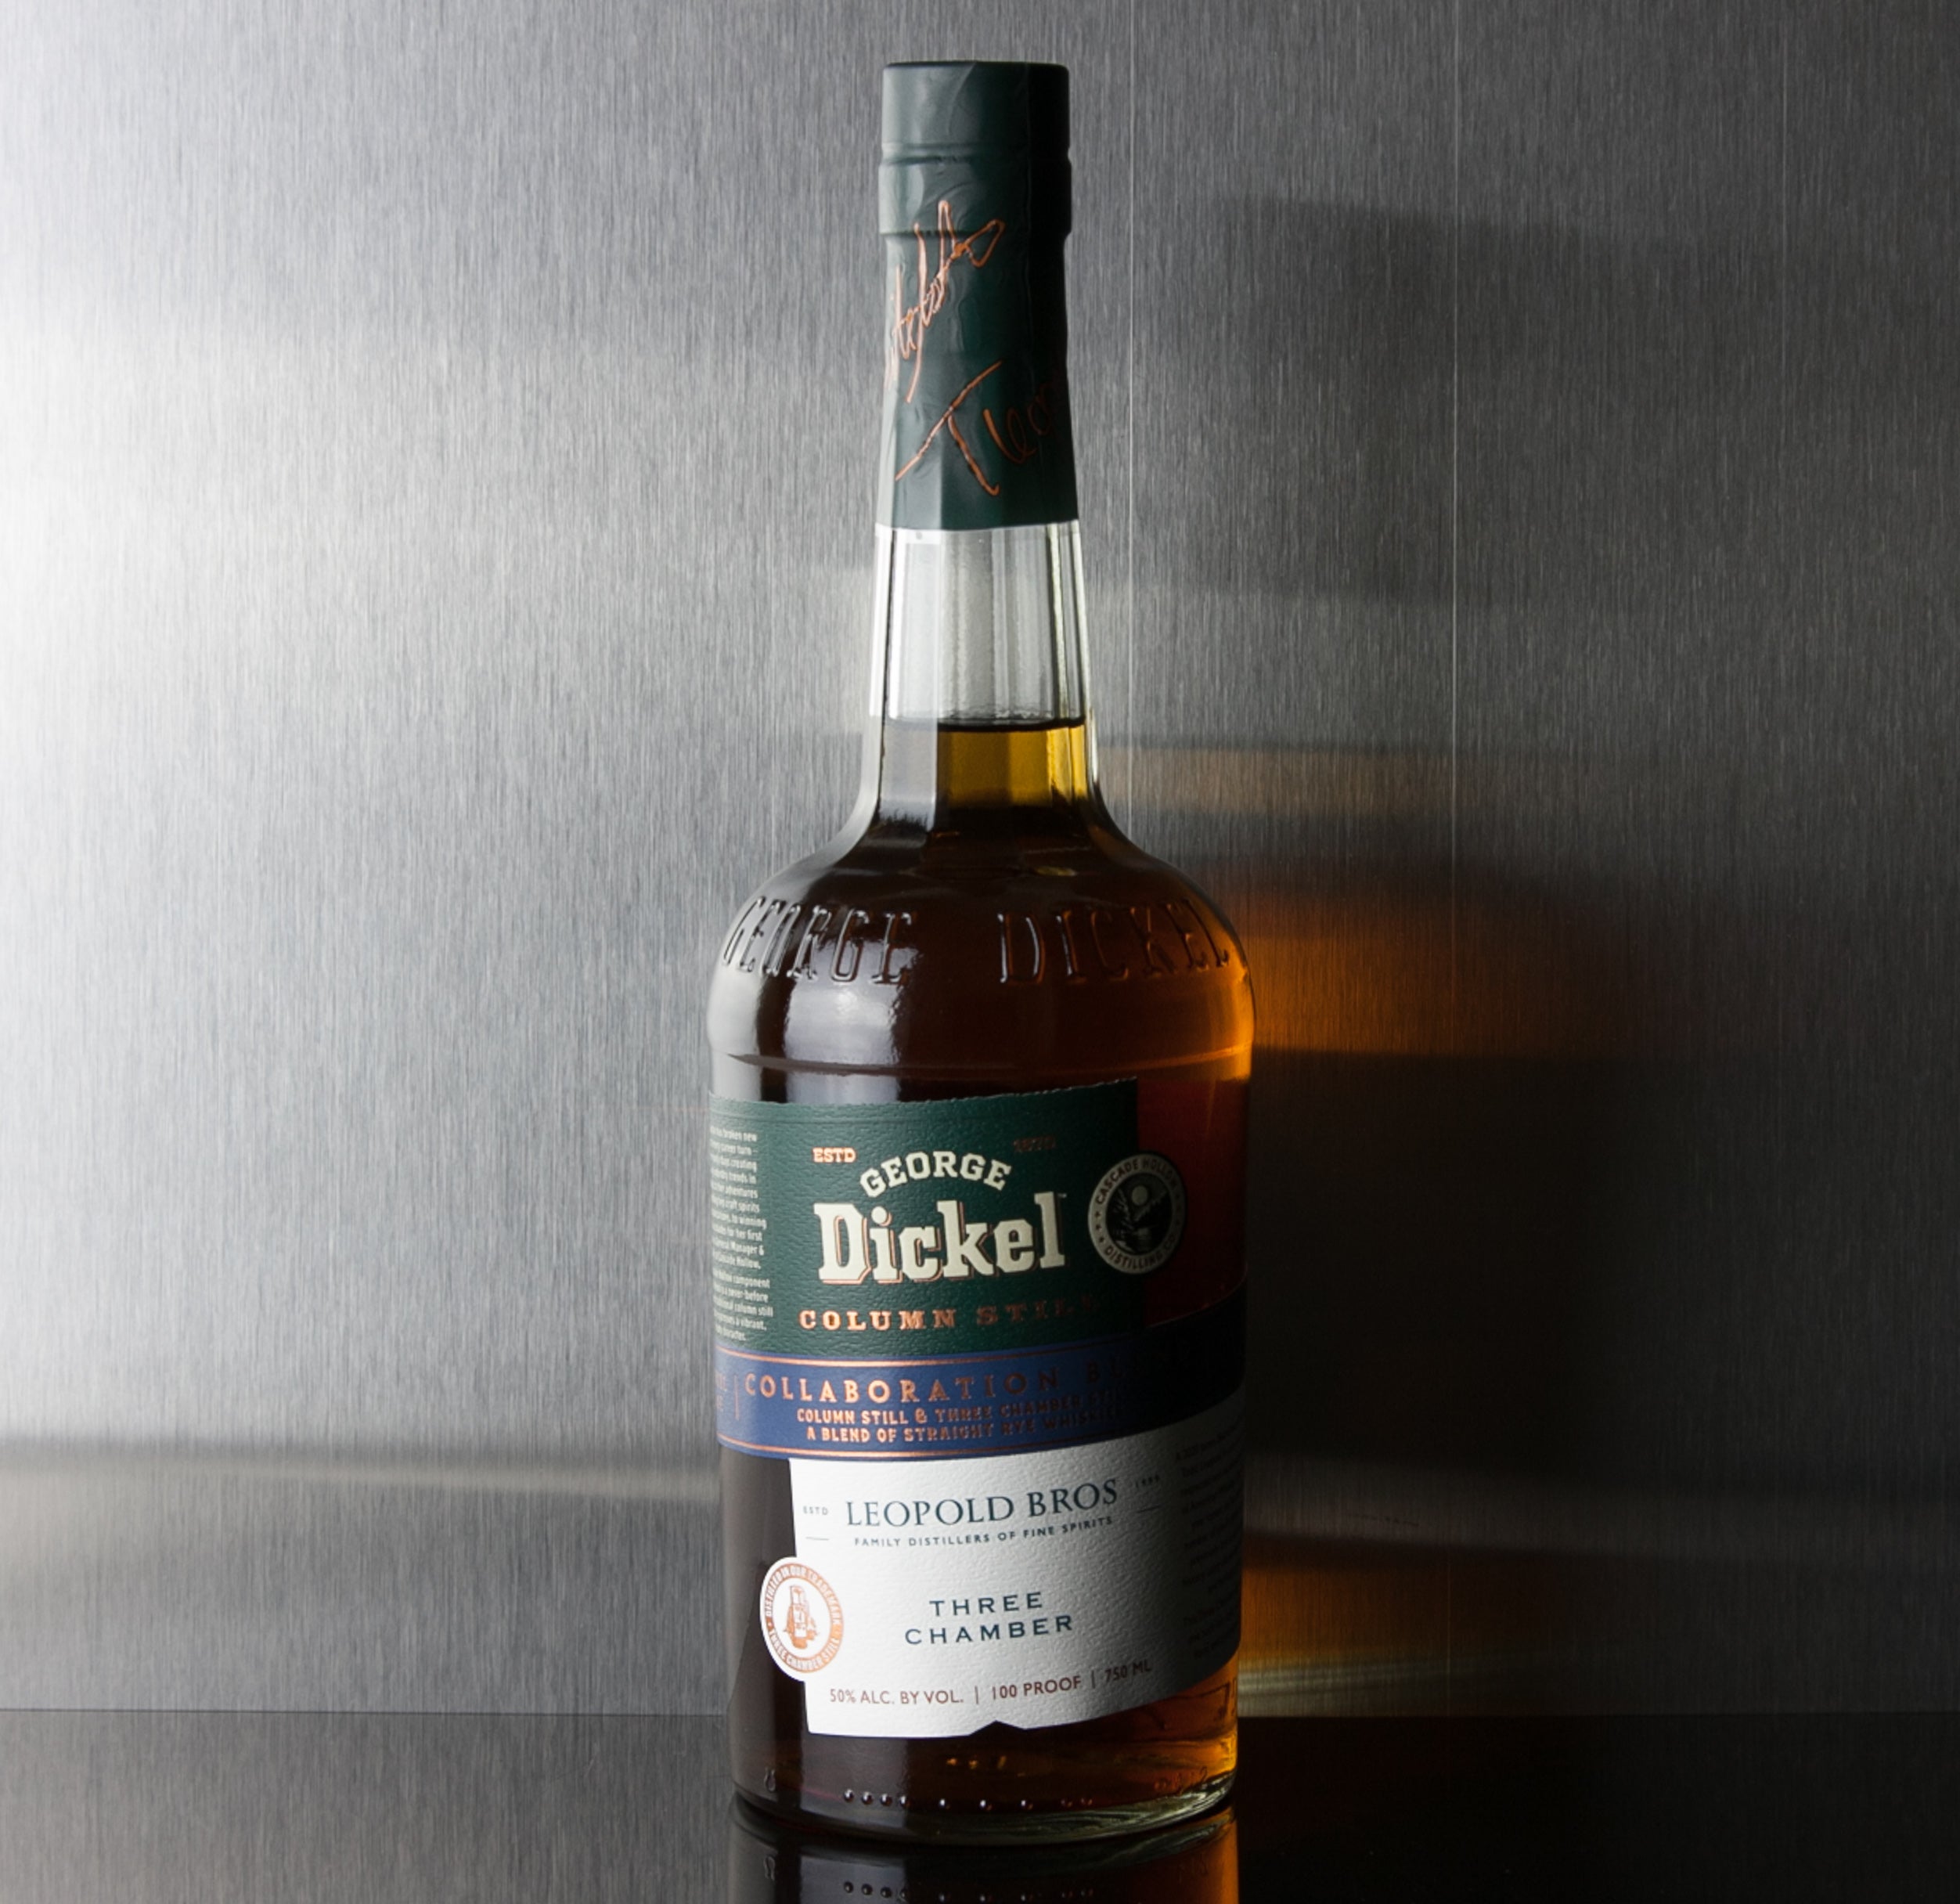 Dickel Leopold Bros. Collaboration Rye Whiskey